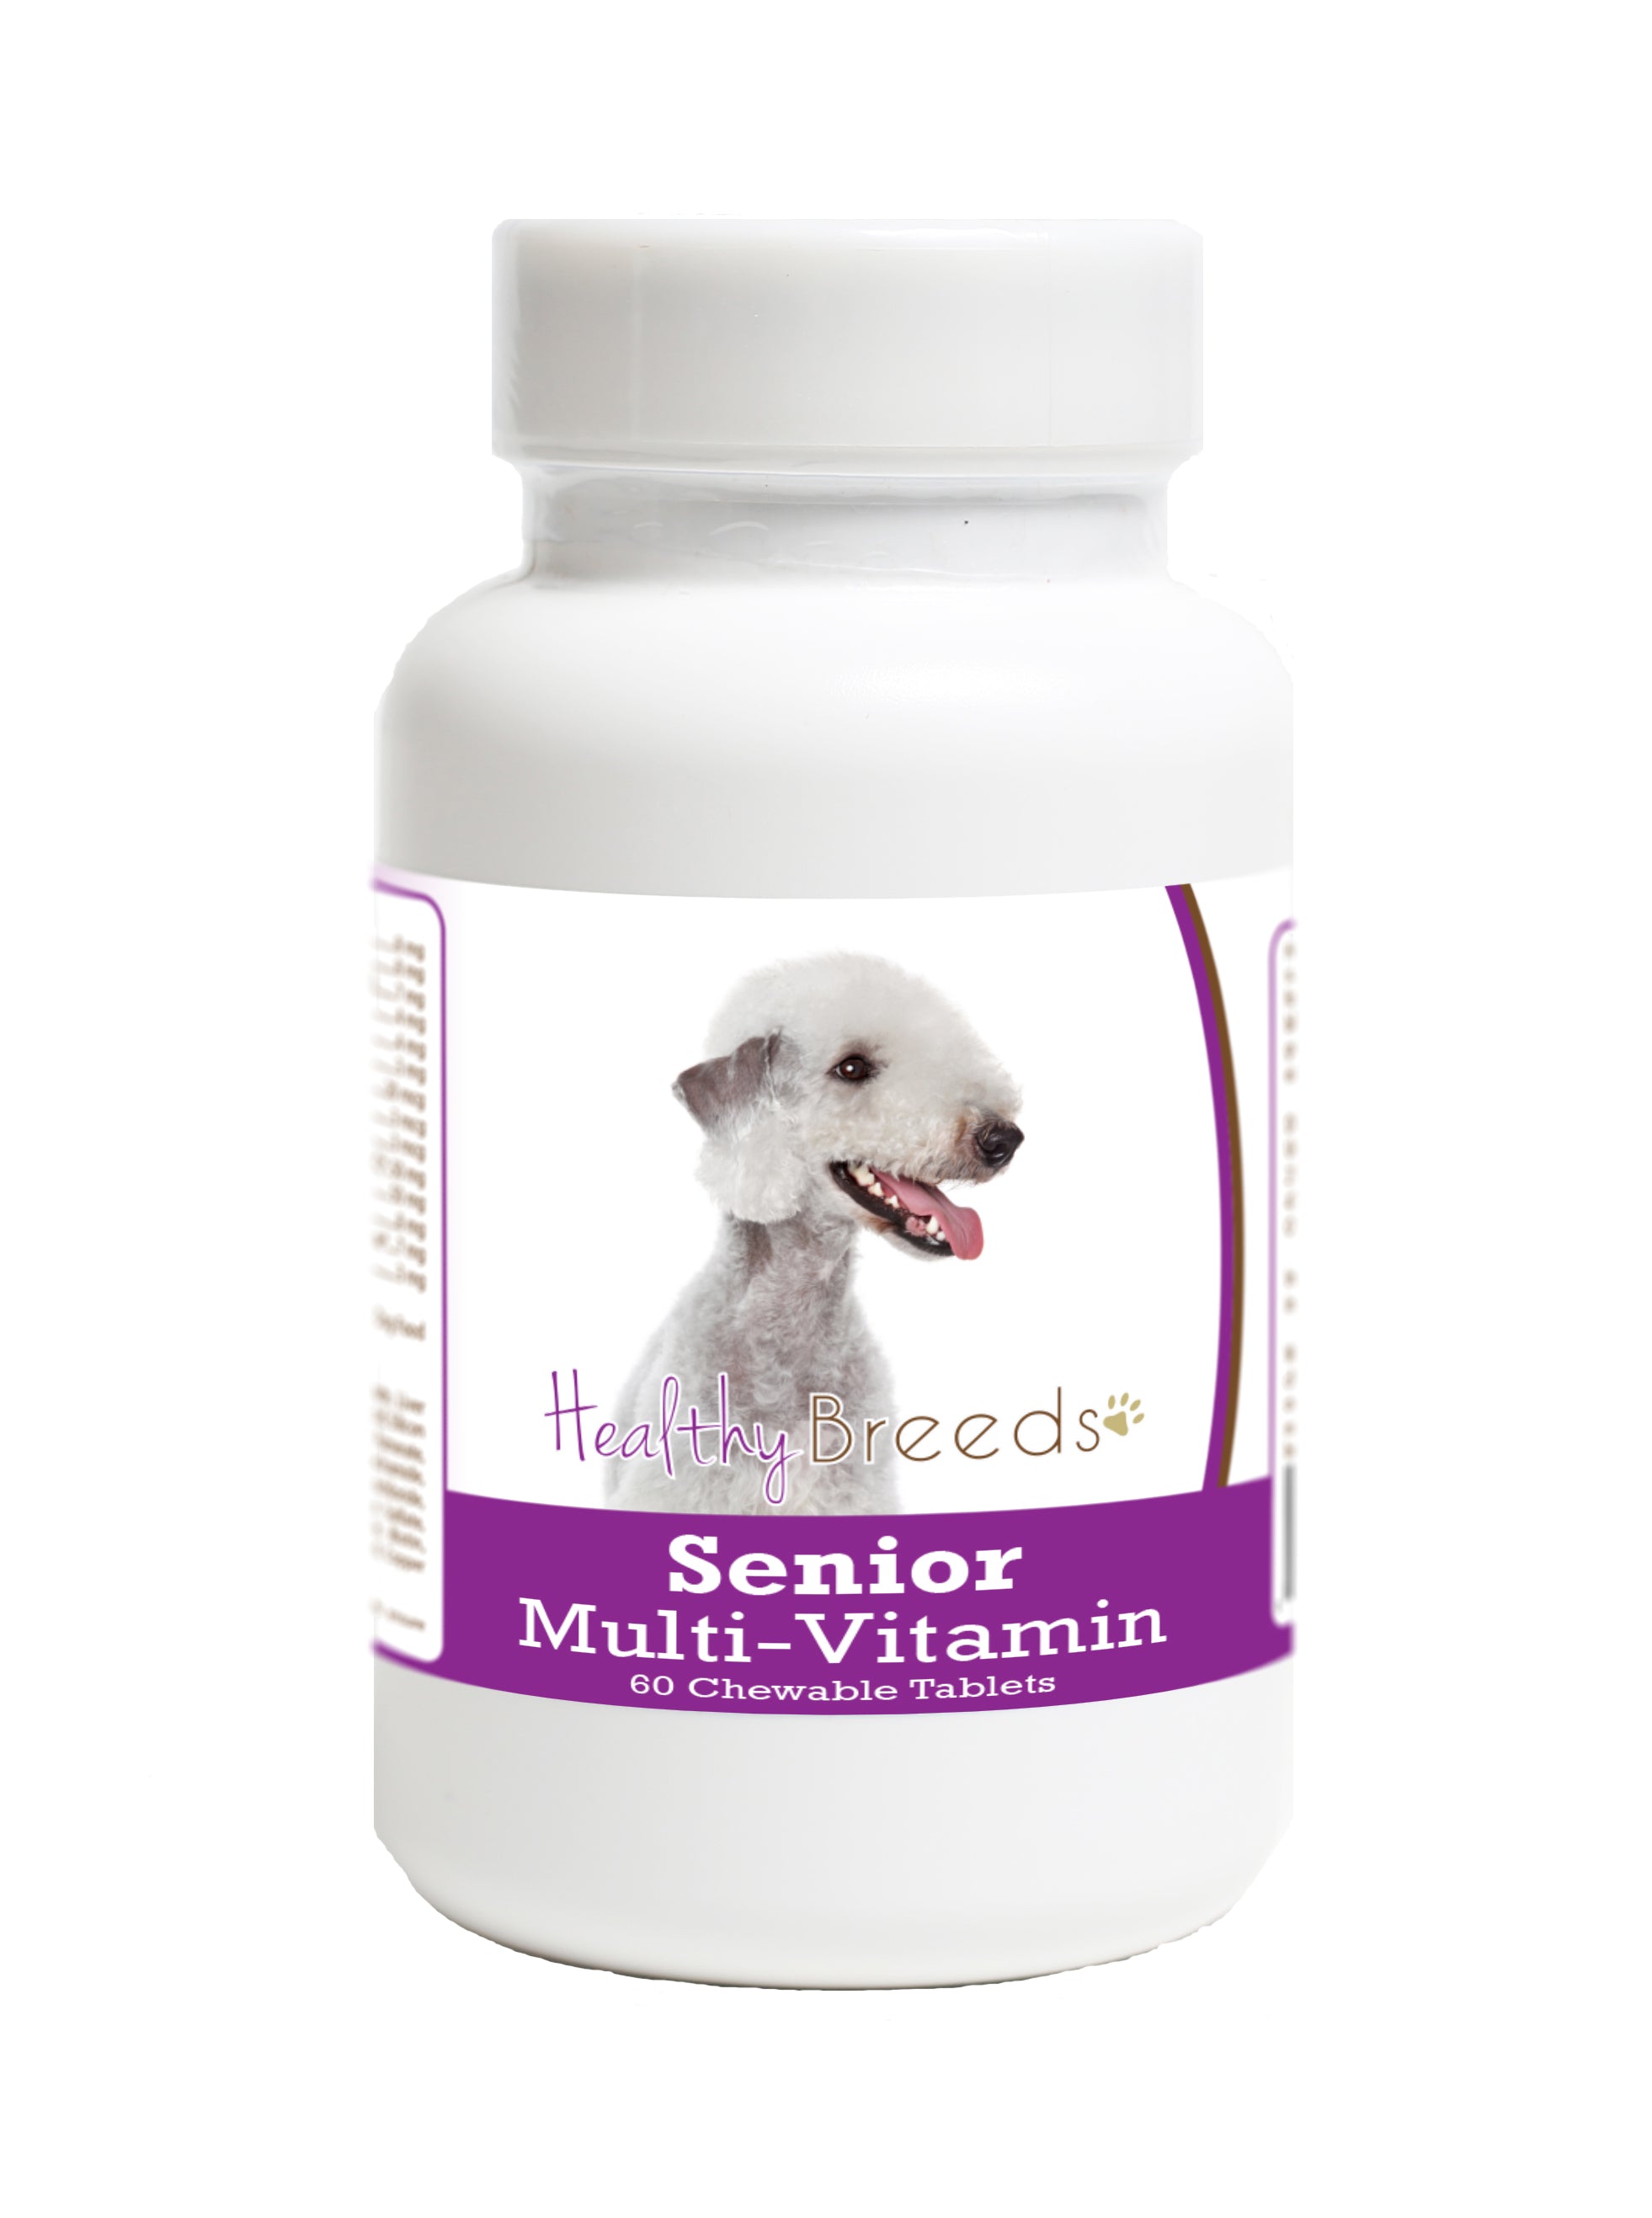 Bedlington Terrier Senior Dog Multivitamin Tablets 60 Count